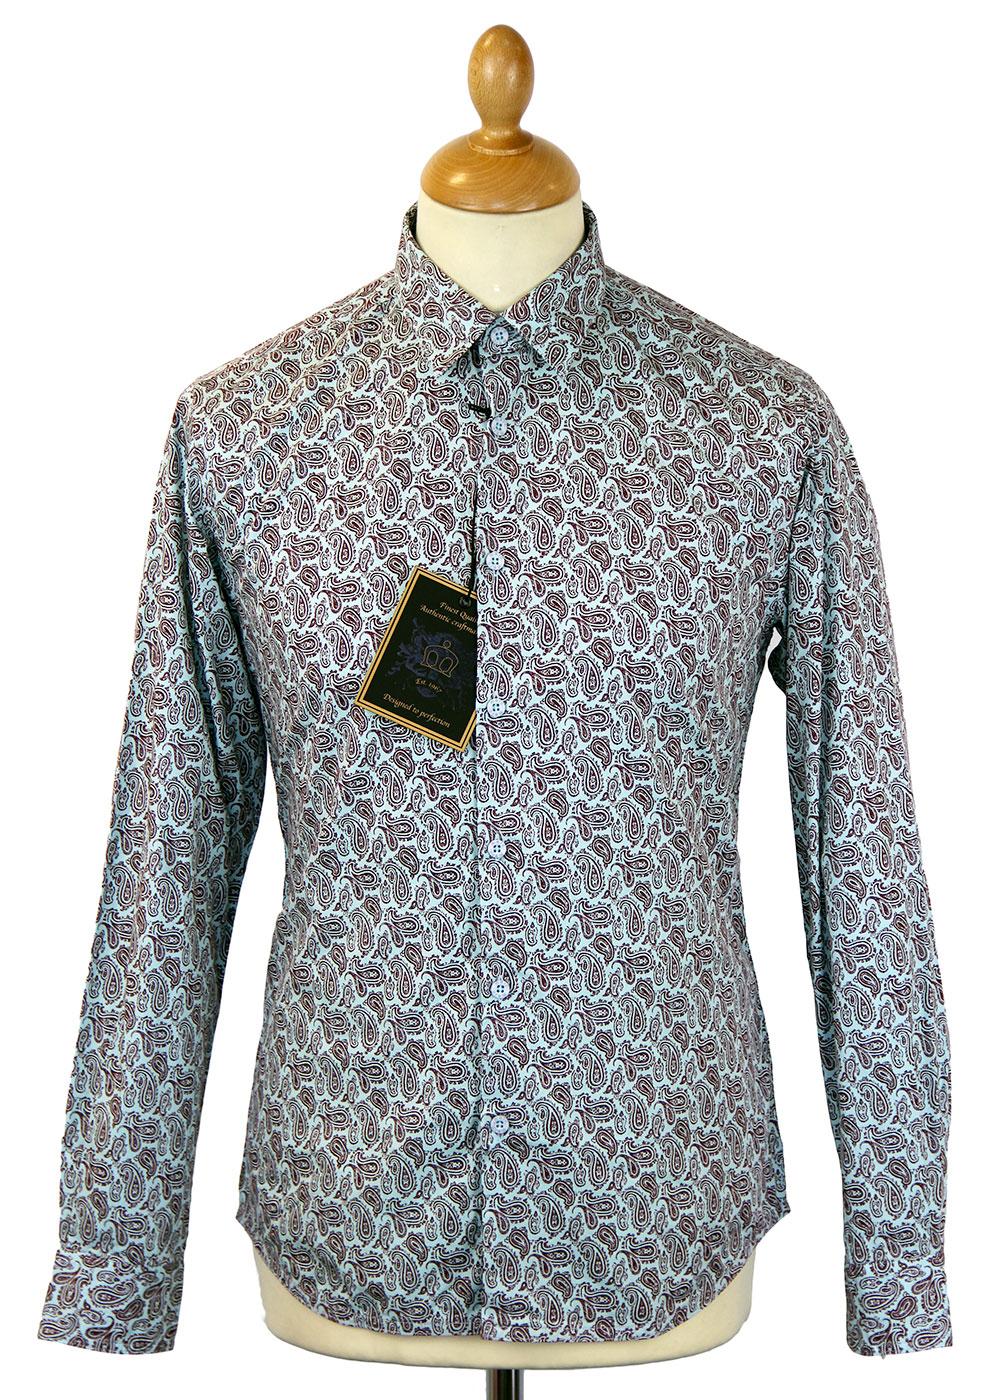 York MERC Retro 60s Mod Monotone Paisley Shirt (S)